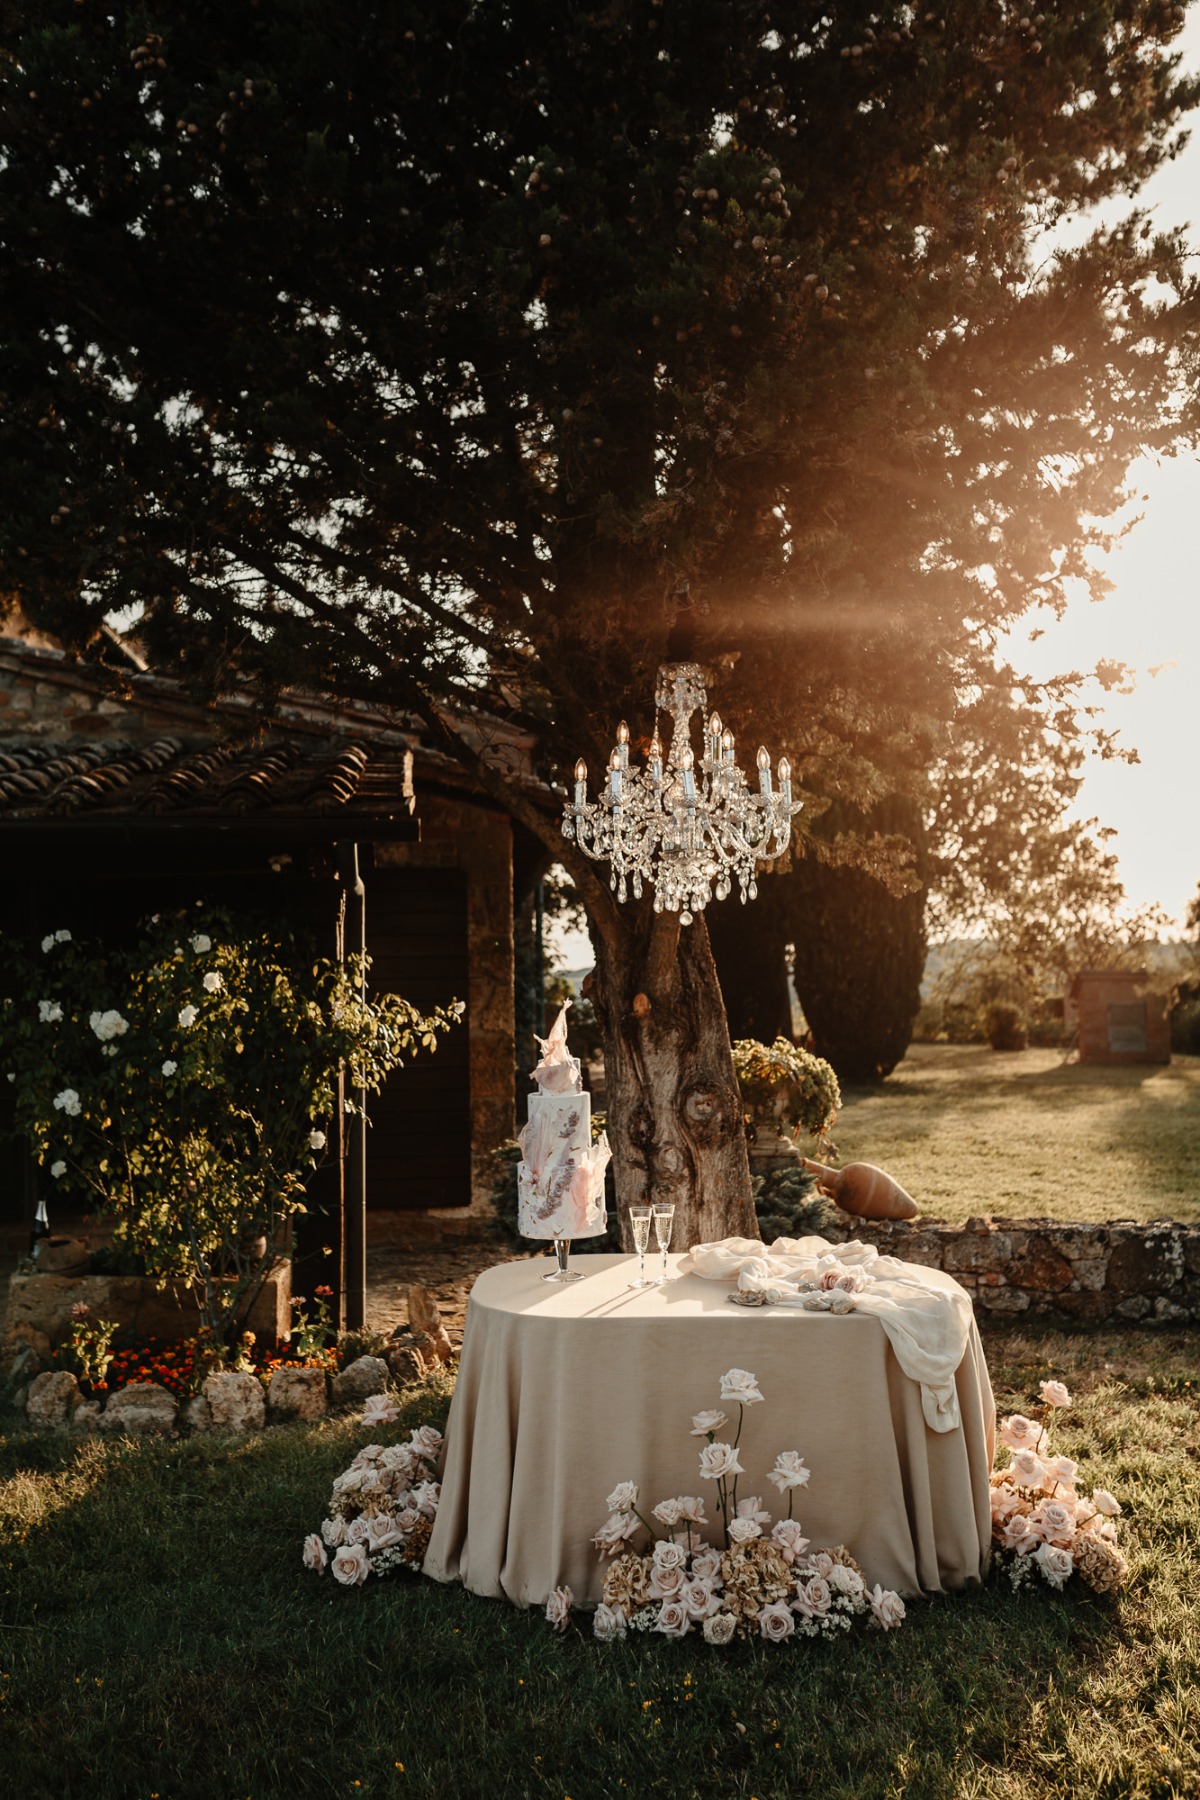 lorenzo-patoia_wedding-phtographer-57